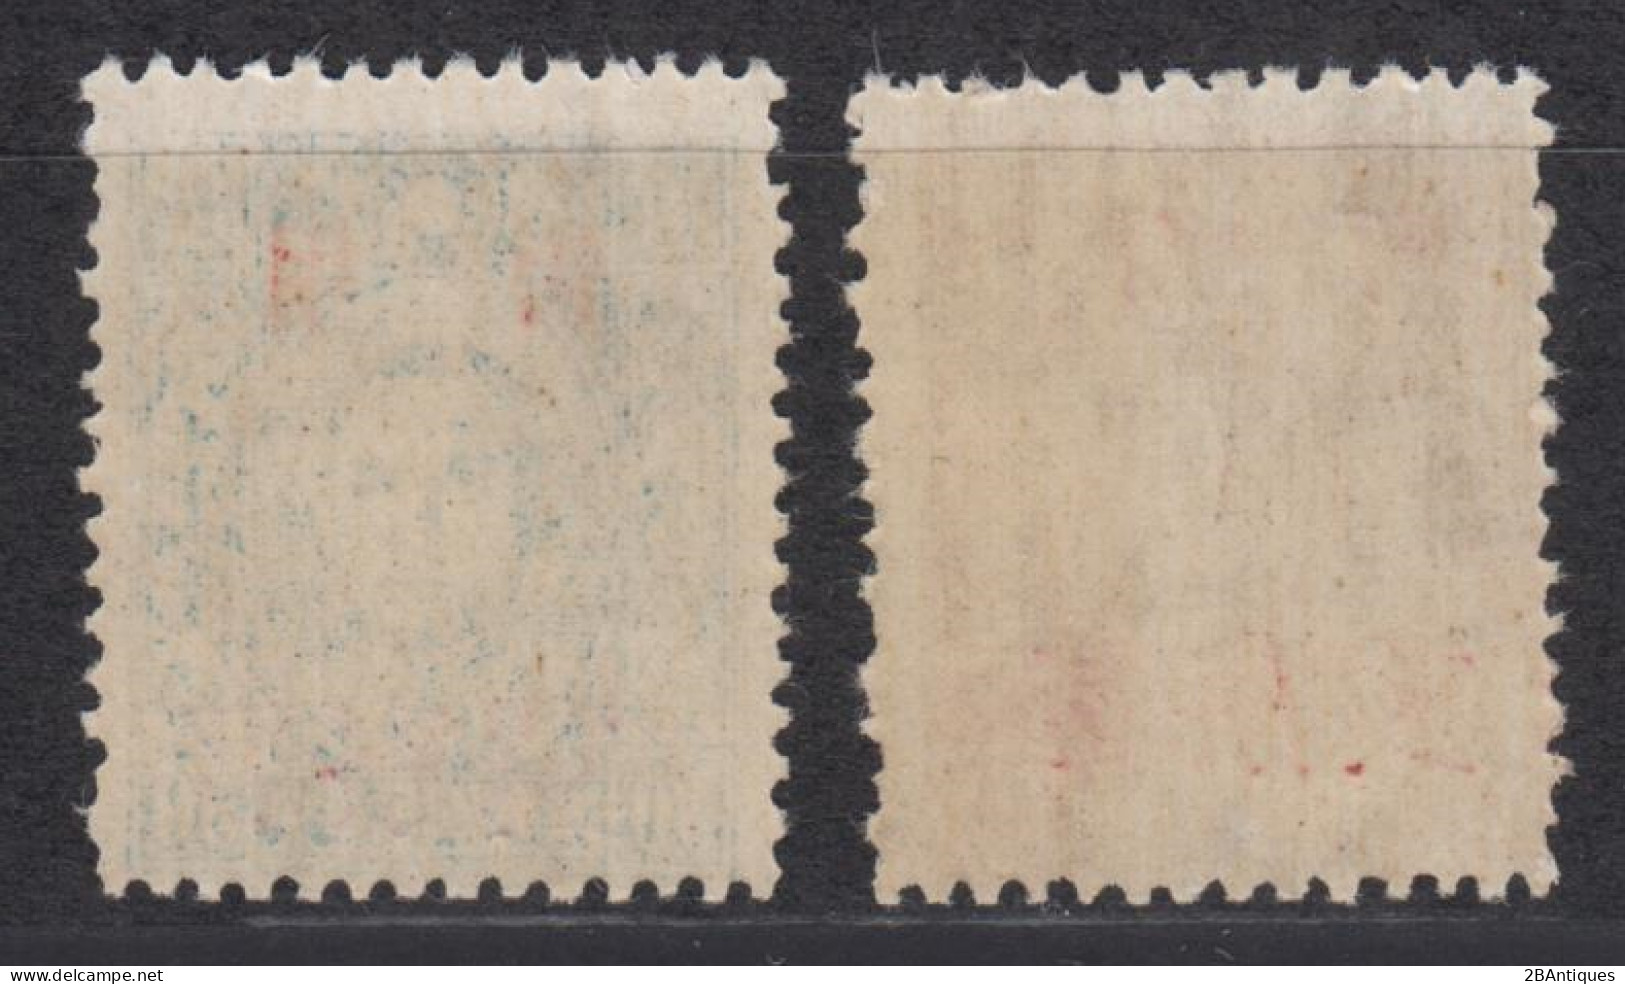 NORTH CHINA SHANXI-QAHAR-HEBEI 1945 - Inner Mongolia Stamps With Overprint "Ji Cha Jin" - Noord-China 1949-50